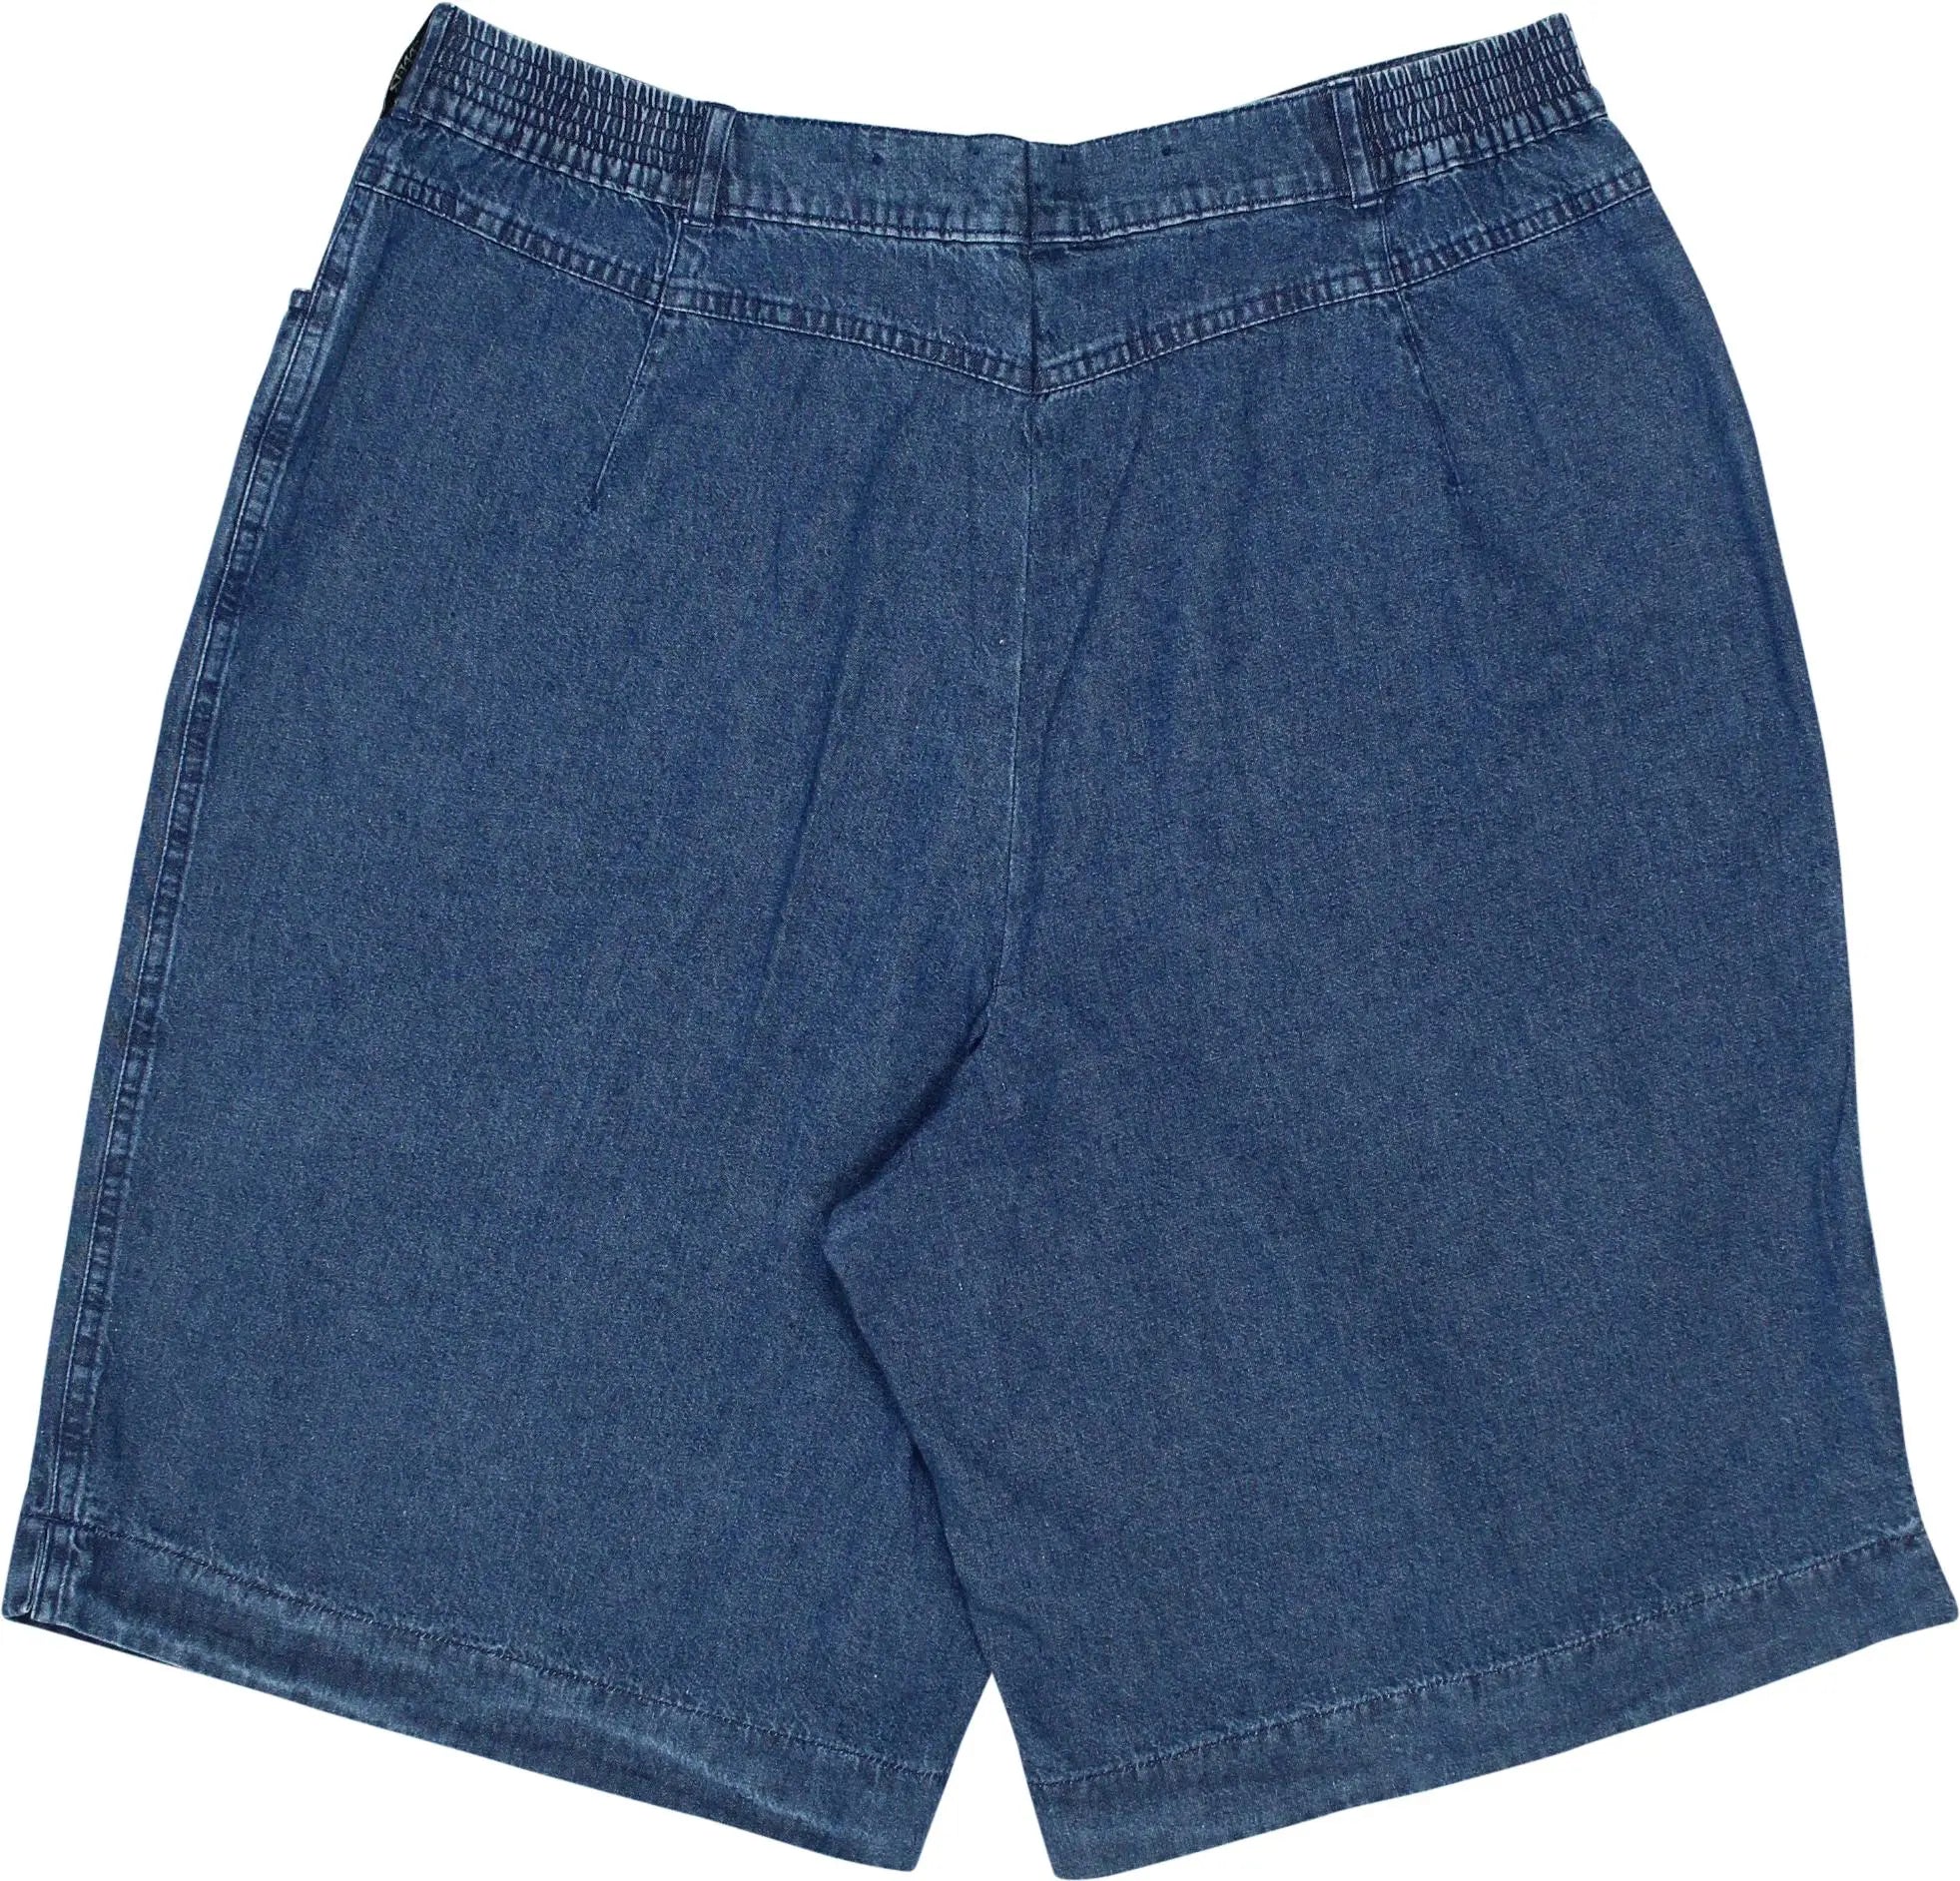 Zerres - Denim Shorts- ThriftTale.com - Vintage and second handclothing